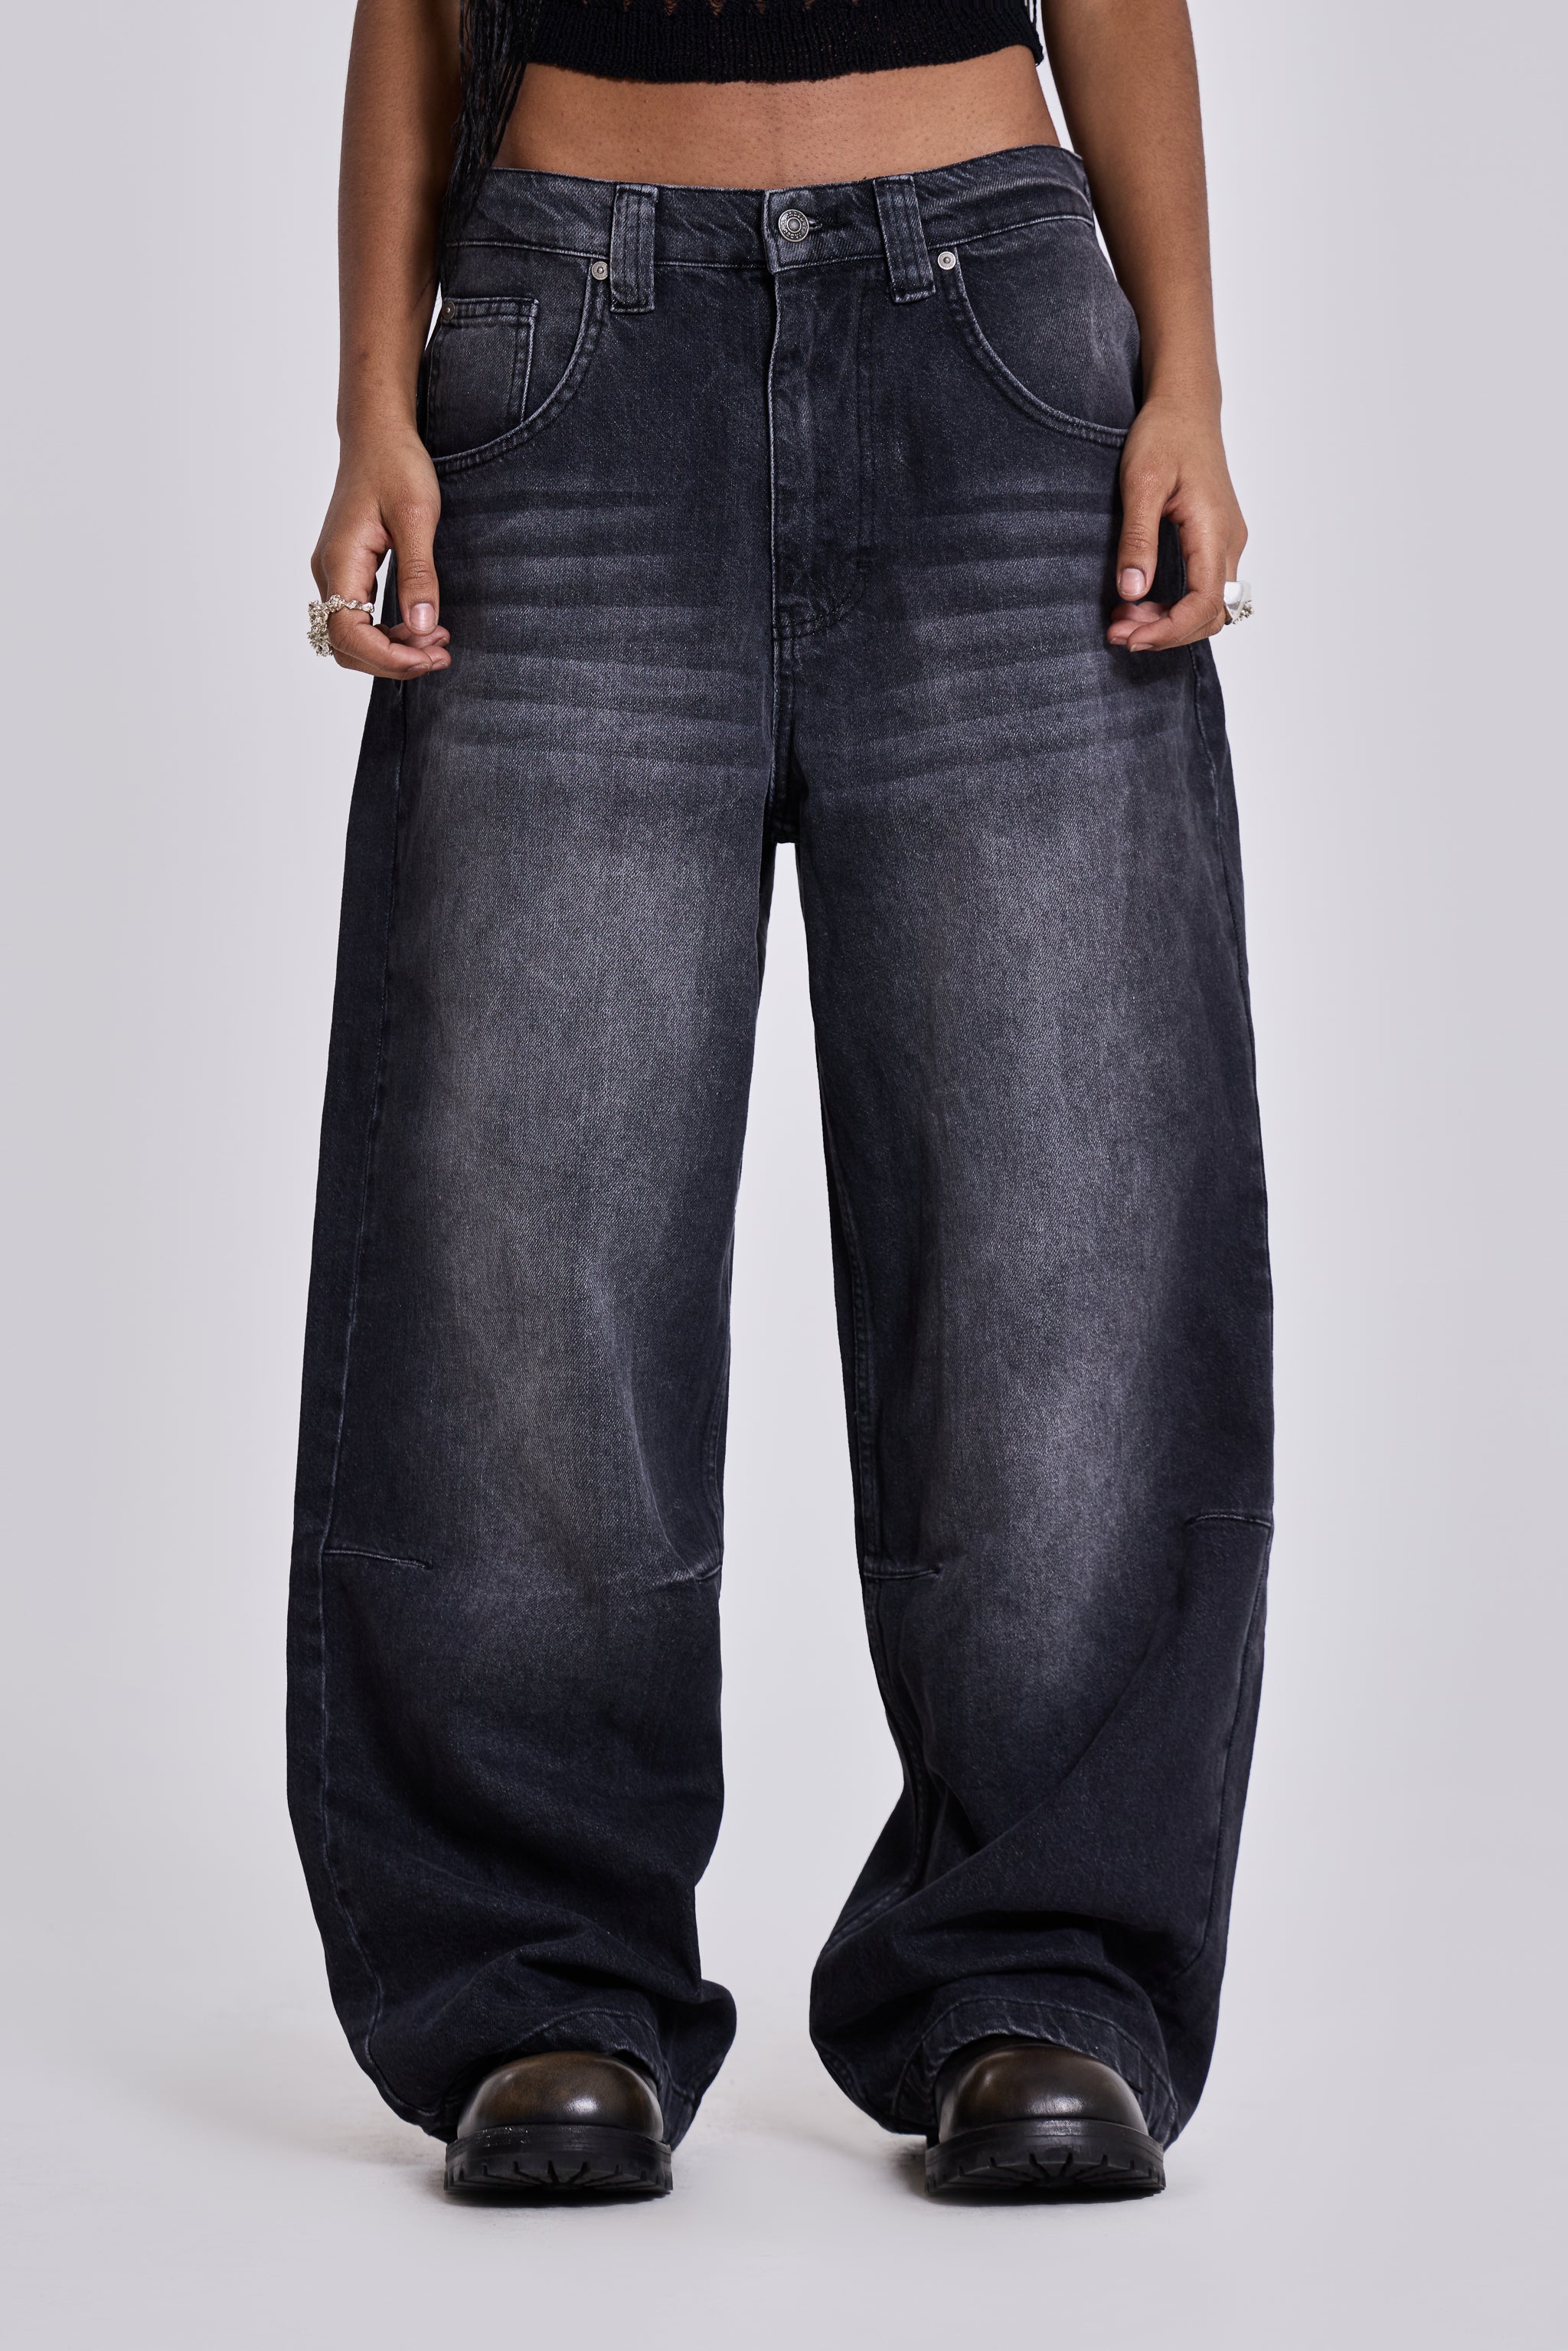 Shop Colossus Jeans | Men's & Women's Denim | Jaded London